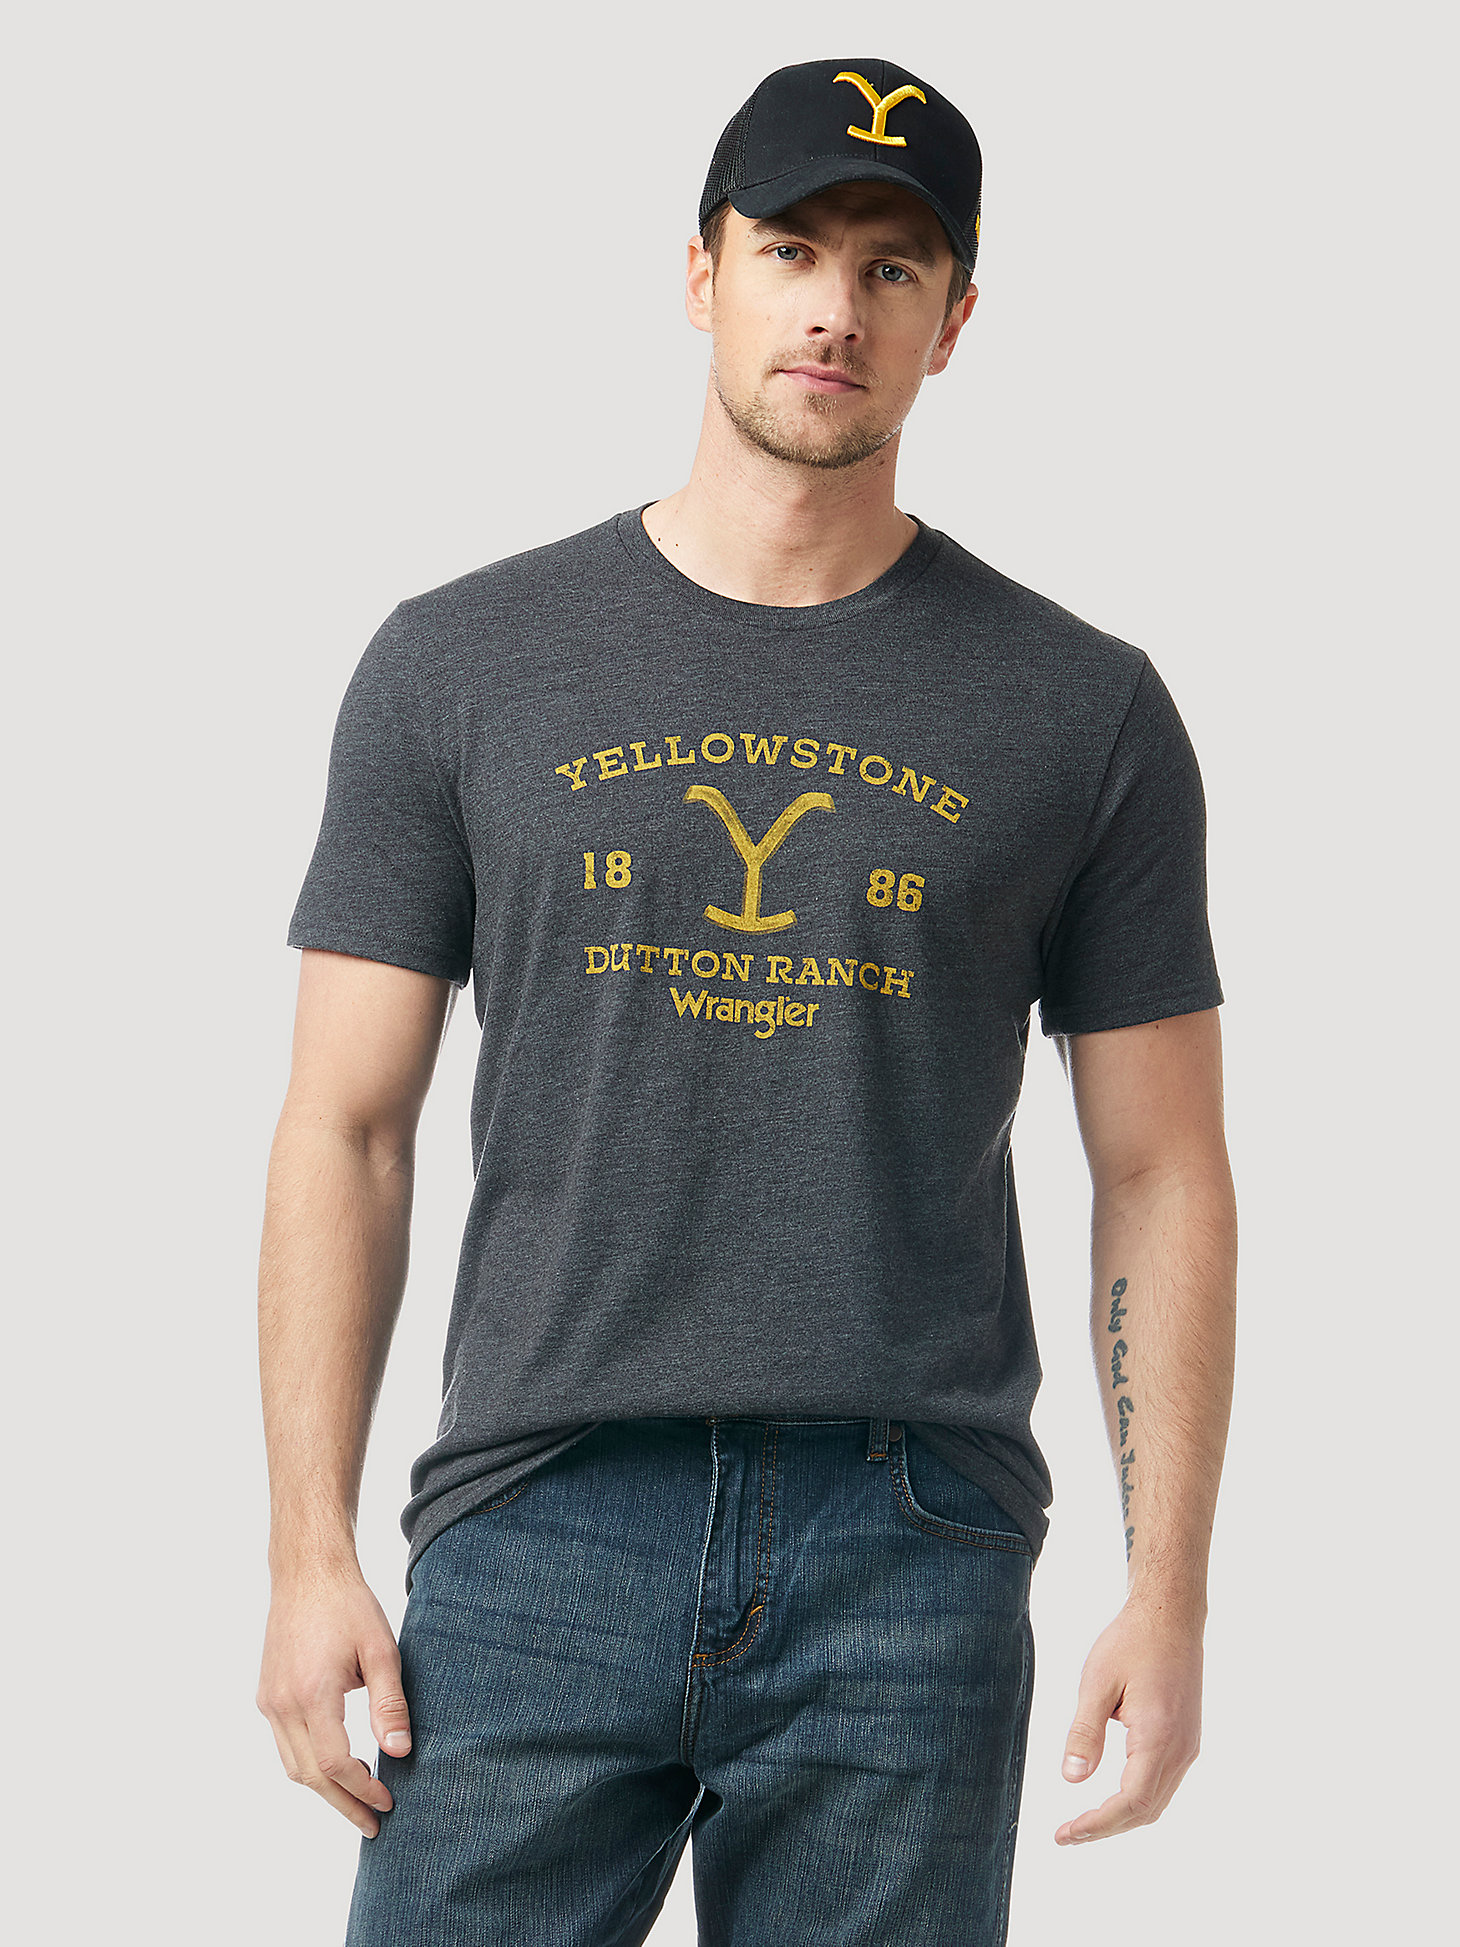 Wrangler x Yellowstone Men's 1886 T-Shirt in Caviar Heather main view